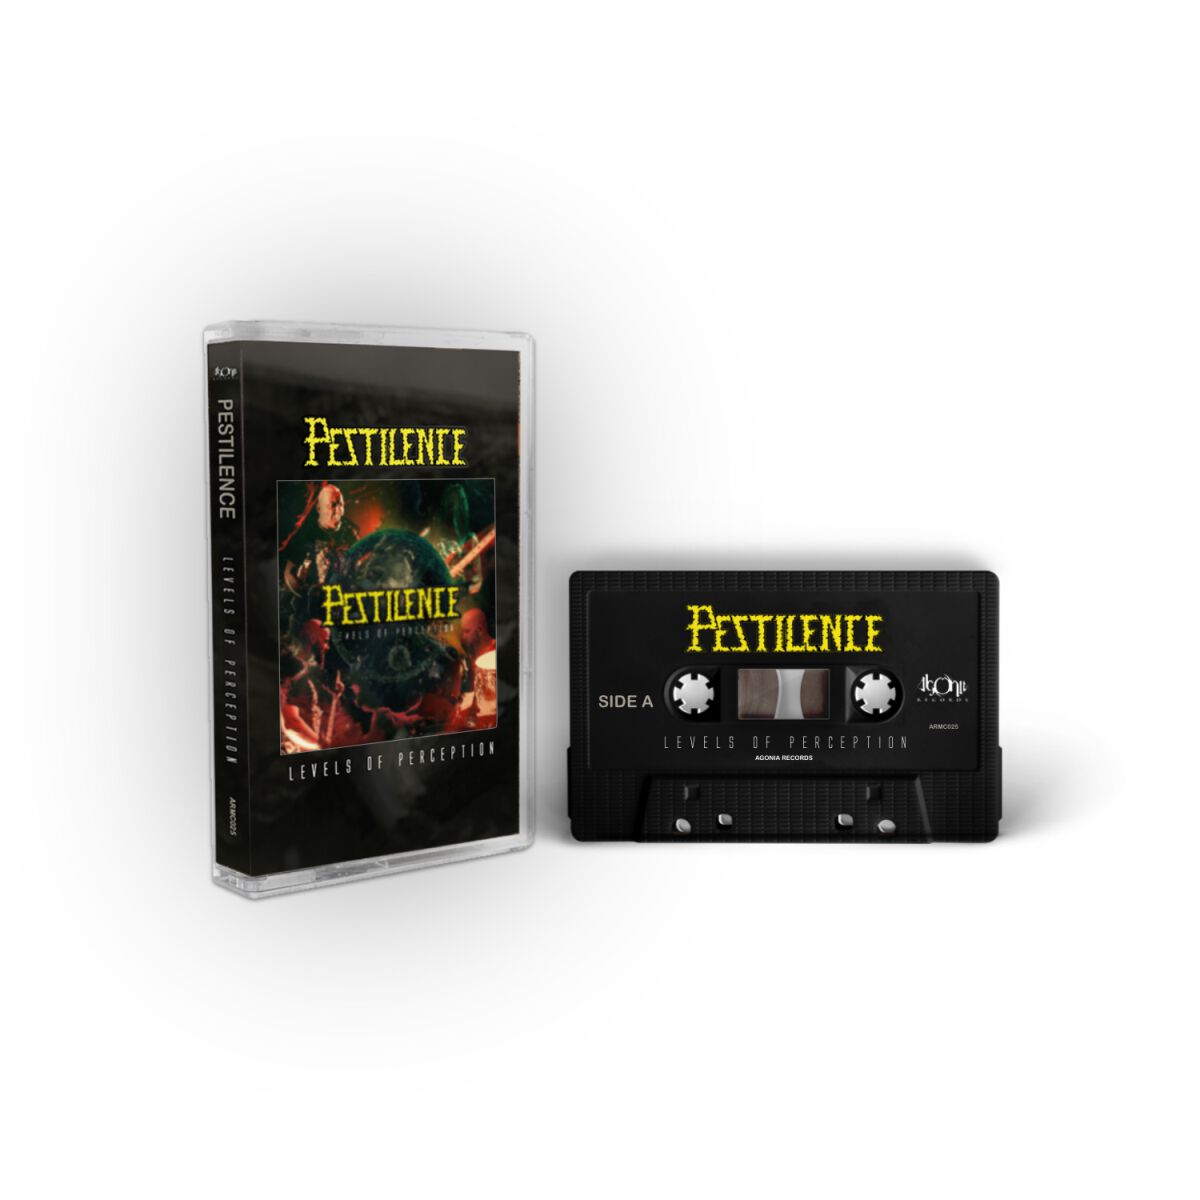 Level of Perception von Pestilence - MC (Limited Edition)